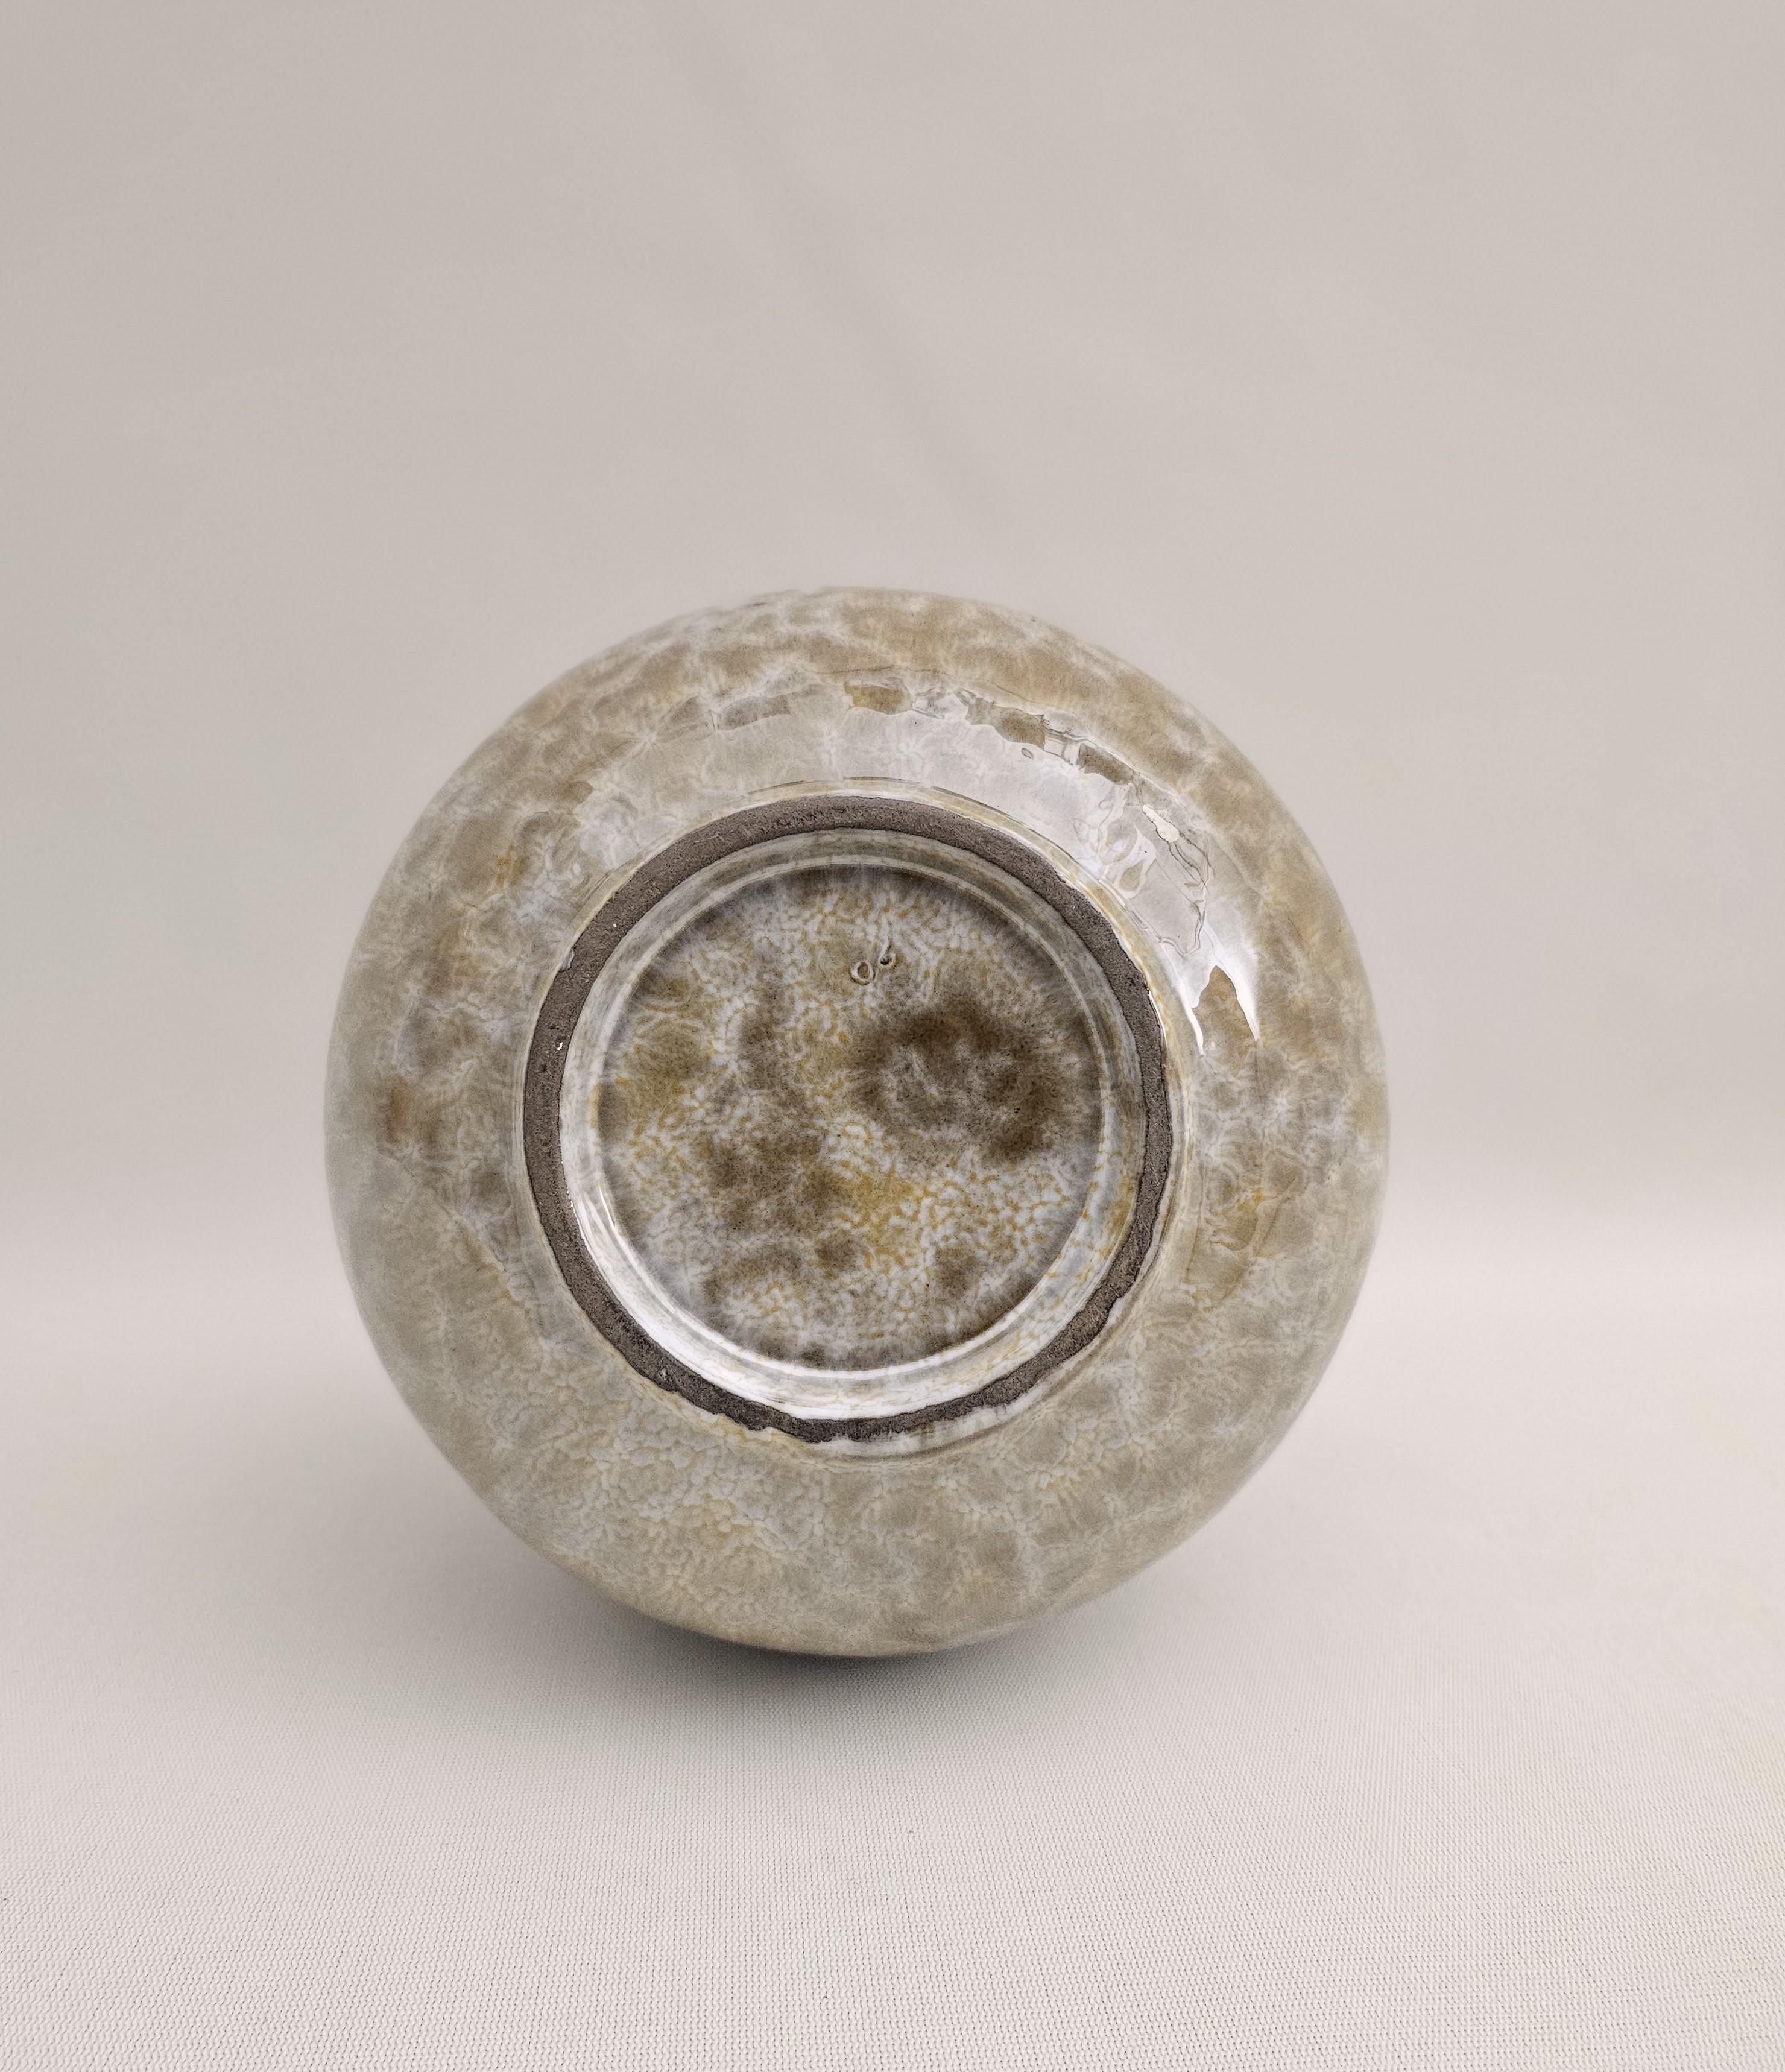 Vase Decorative Object Ceramic Enamelled Midcentury Modern Italian Design 1960s For Sale 2